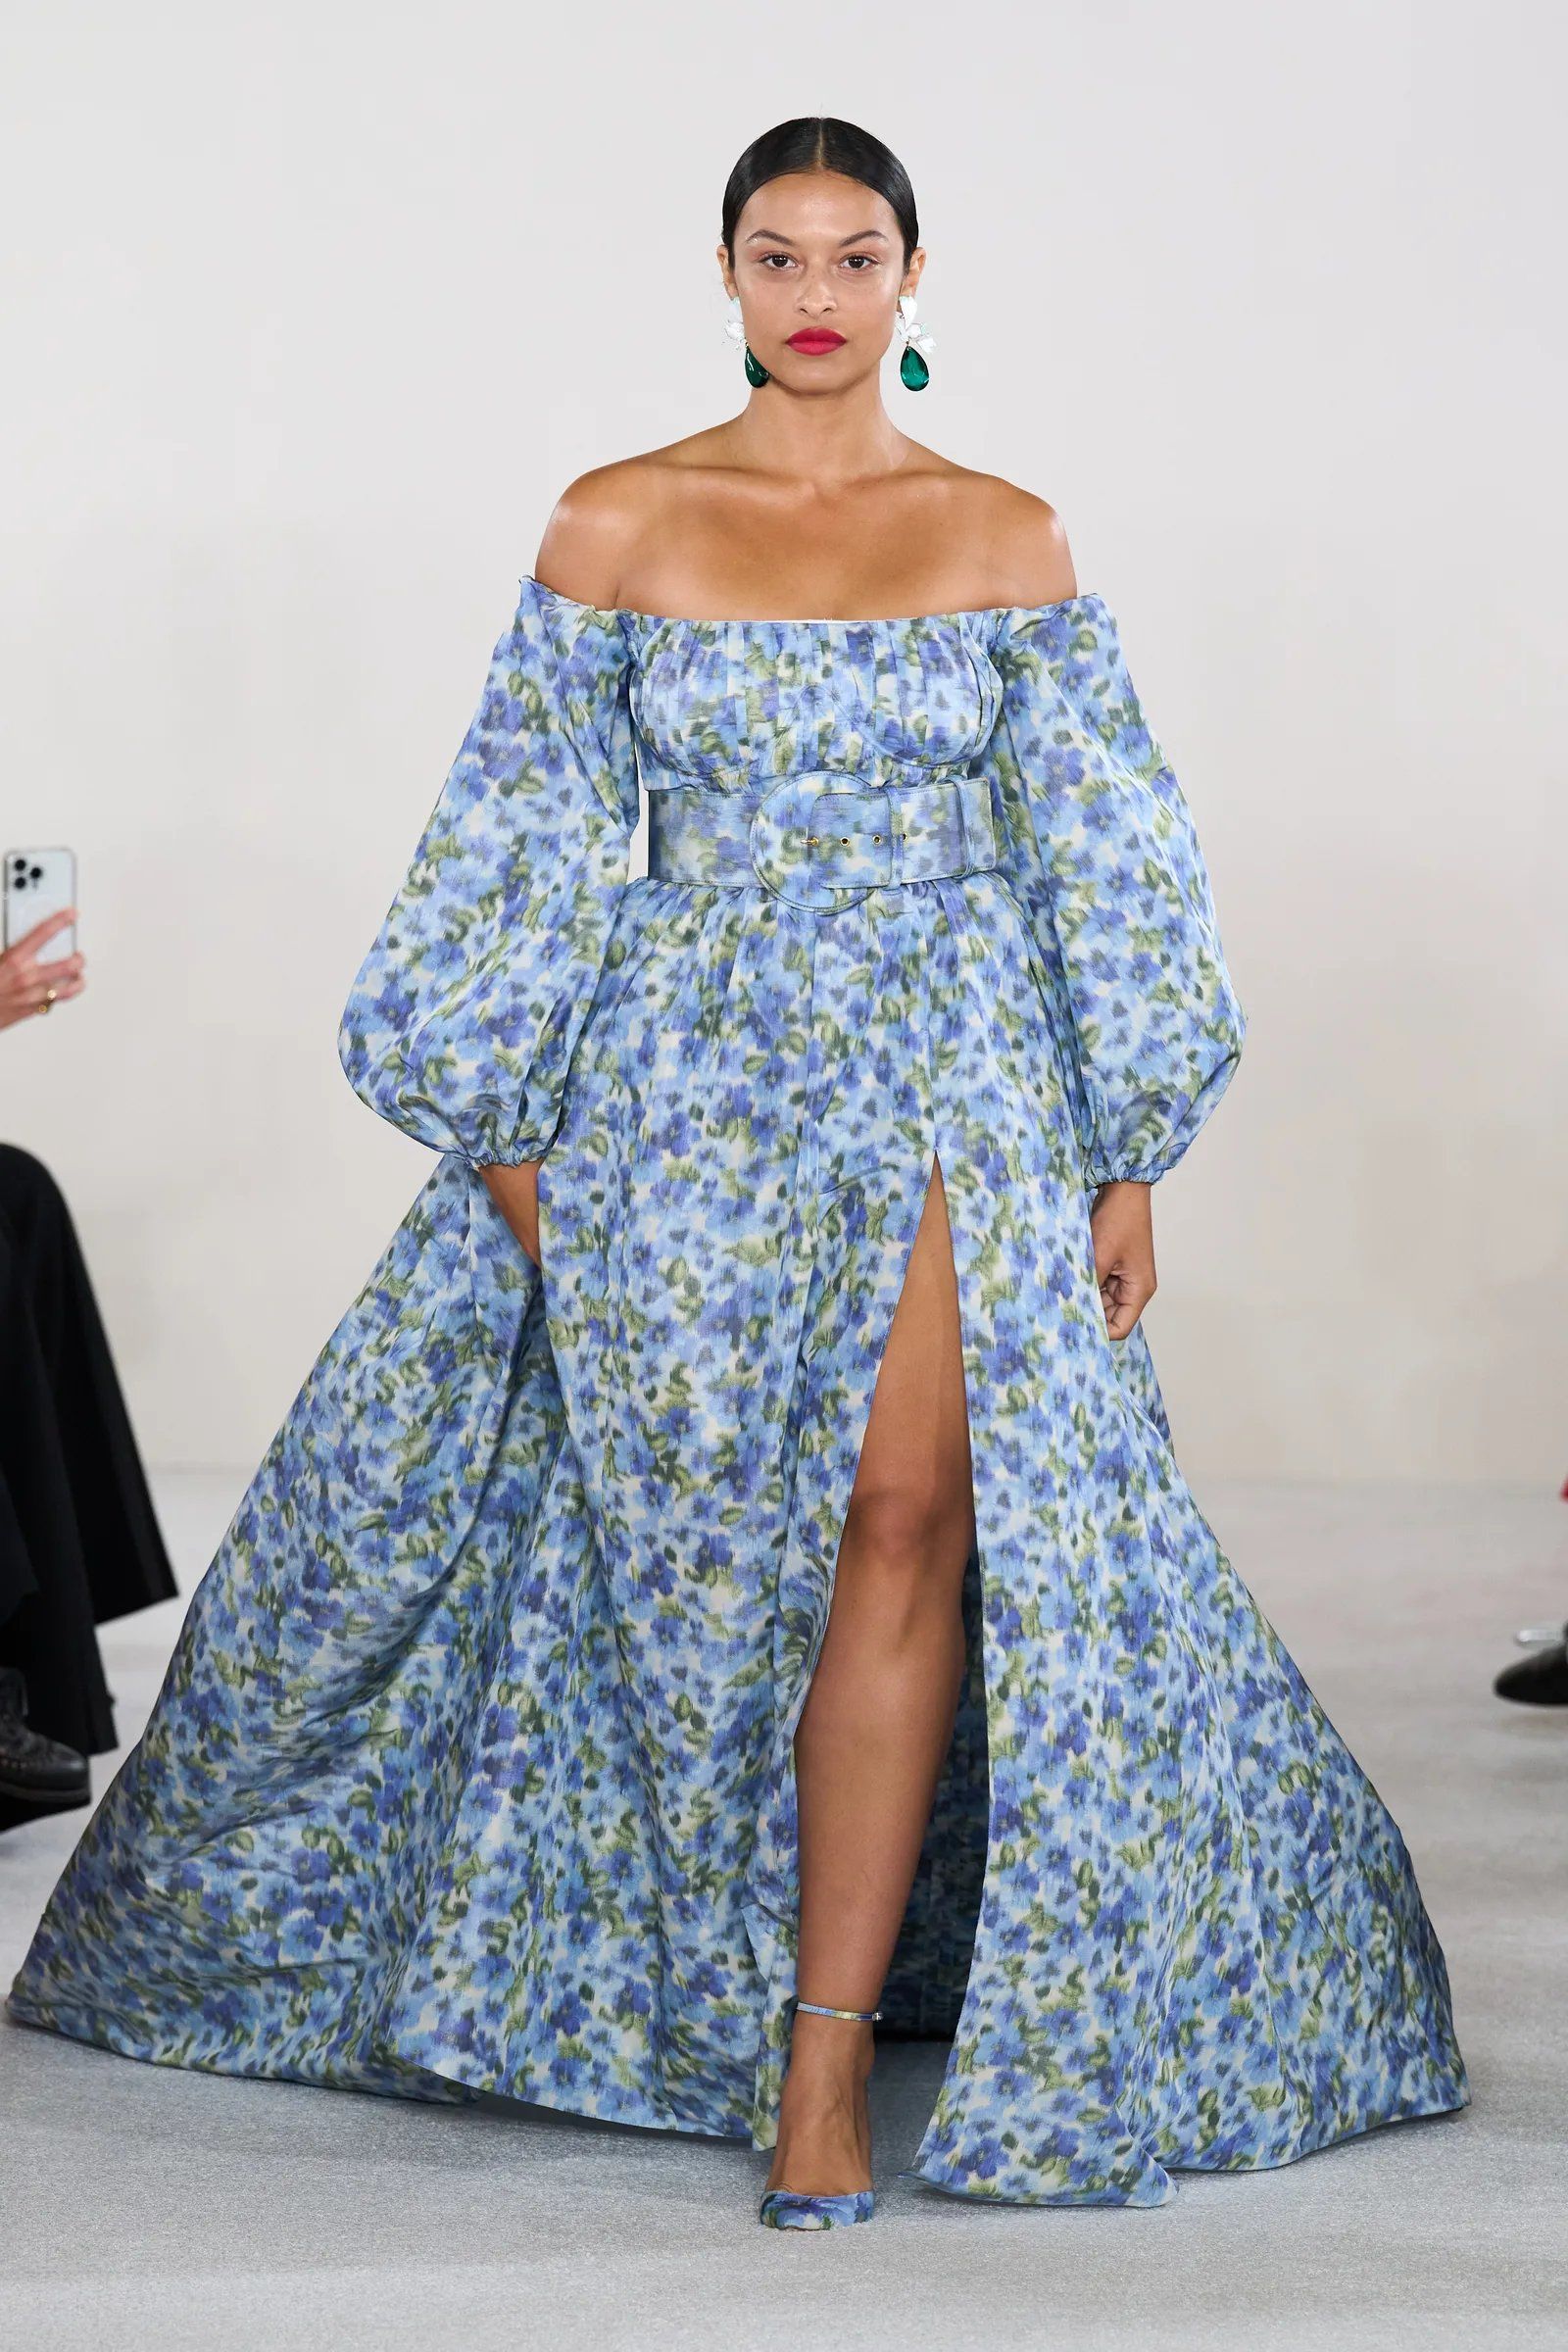 Carolina Herrera Spring 2023 Ready to Wear di New York Fashion Week.